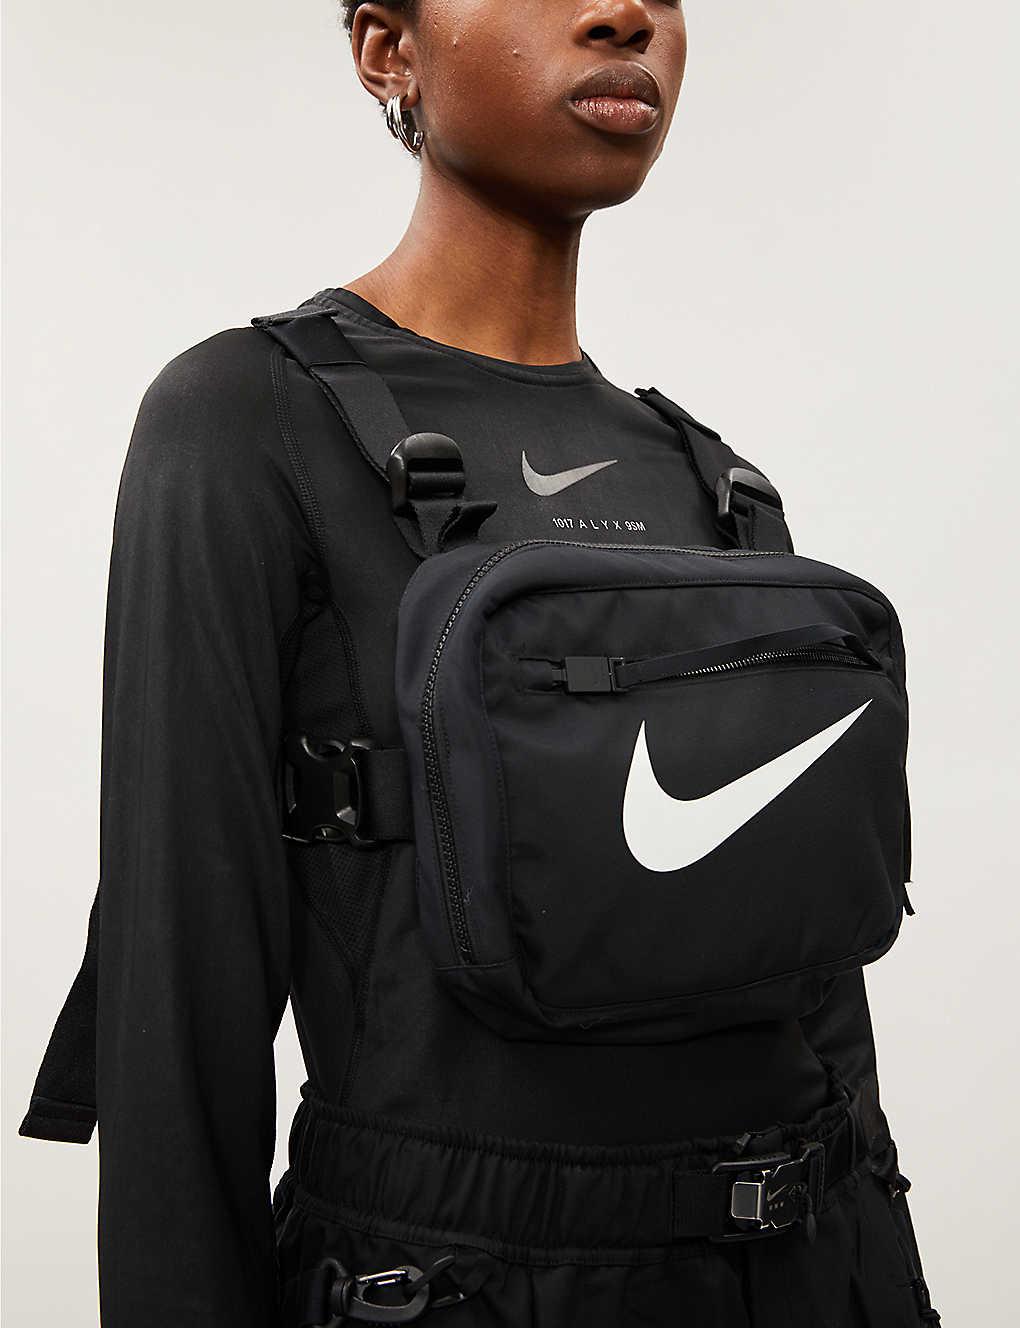 Nike X Matthew M Williams Branded Chest Rig in Black | Lyst